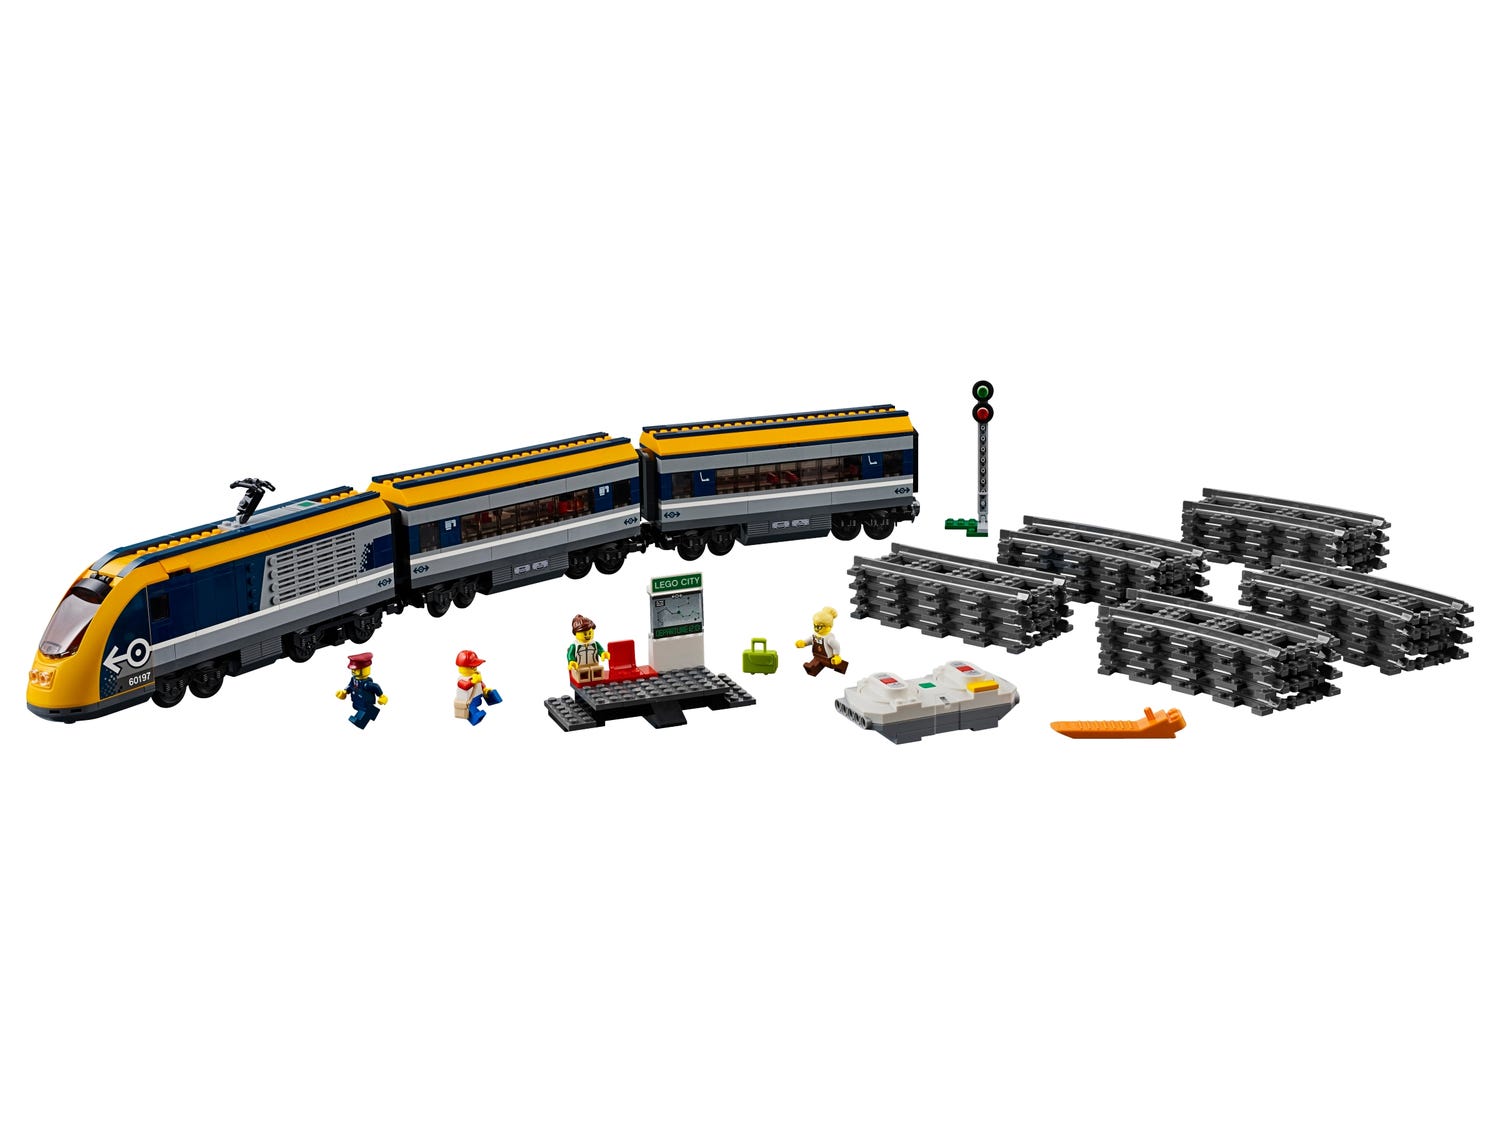 Burro vulgar rock Tren de pasajeros 60197 | City | Oficial LEGO® Shop ES